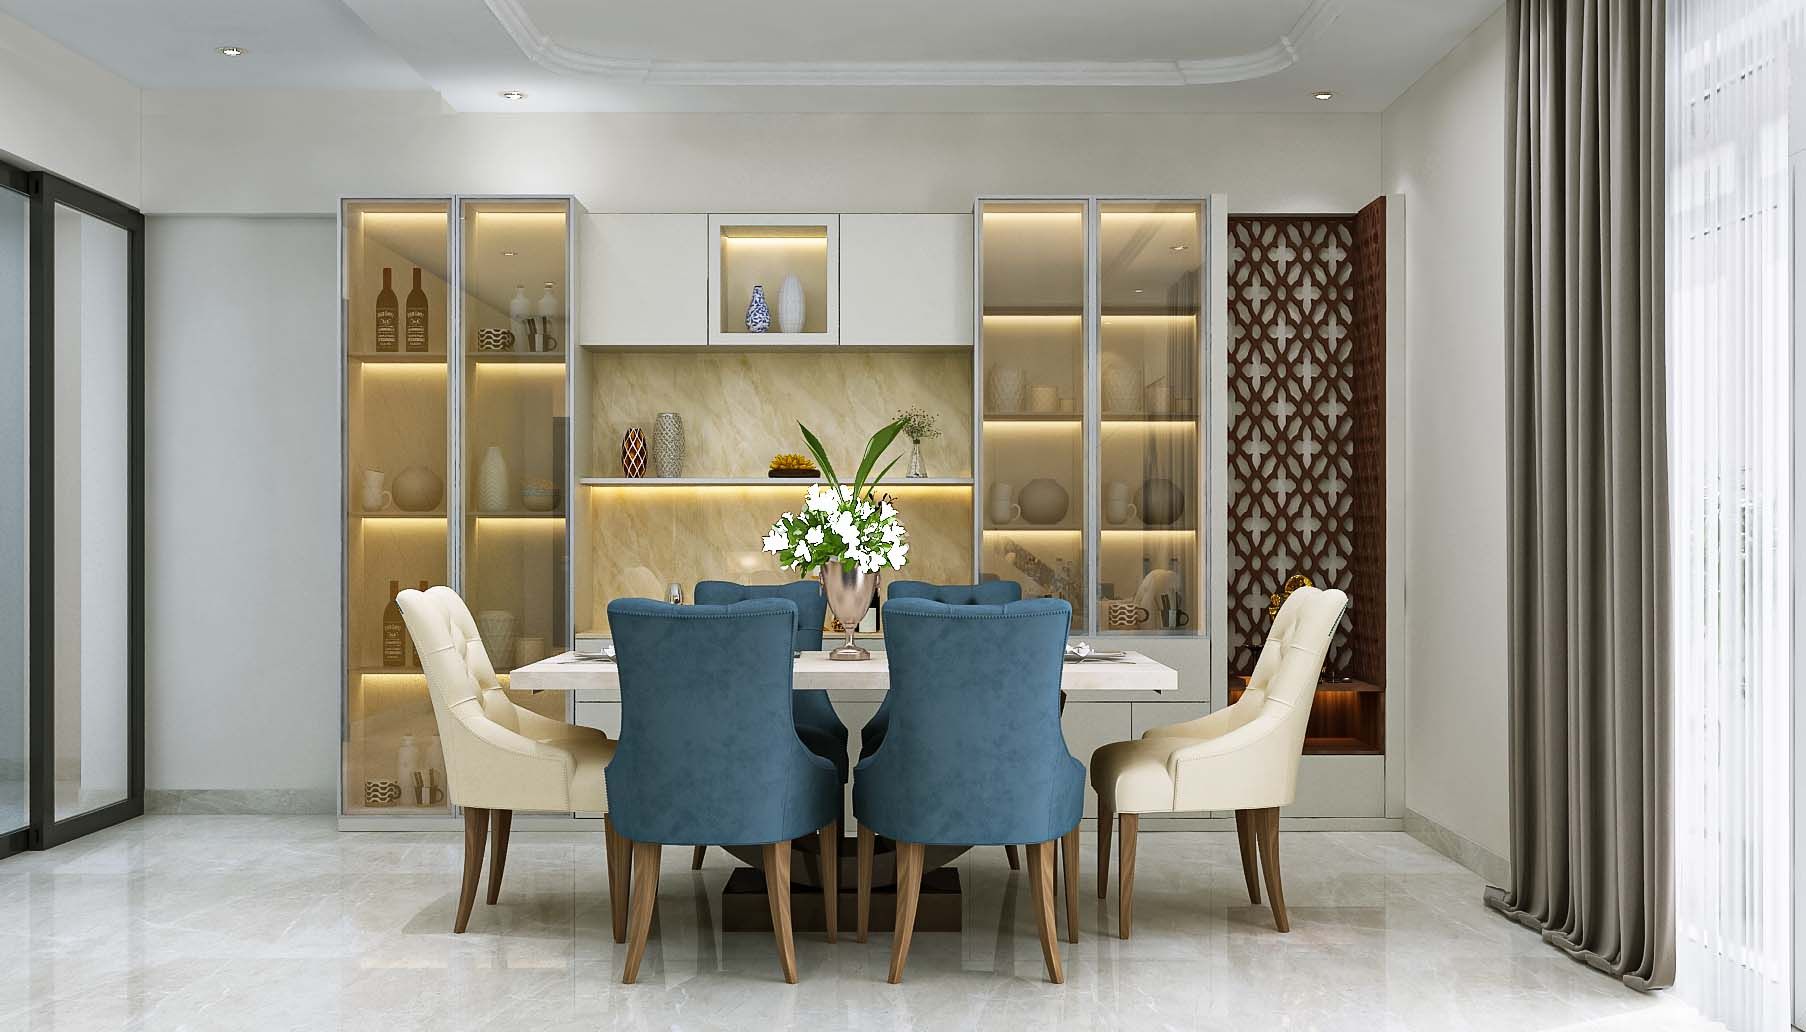 Modern Dining Room Design With Large Crockery Unit